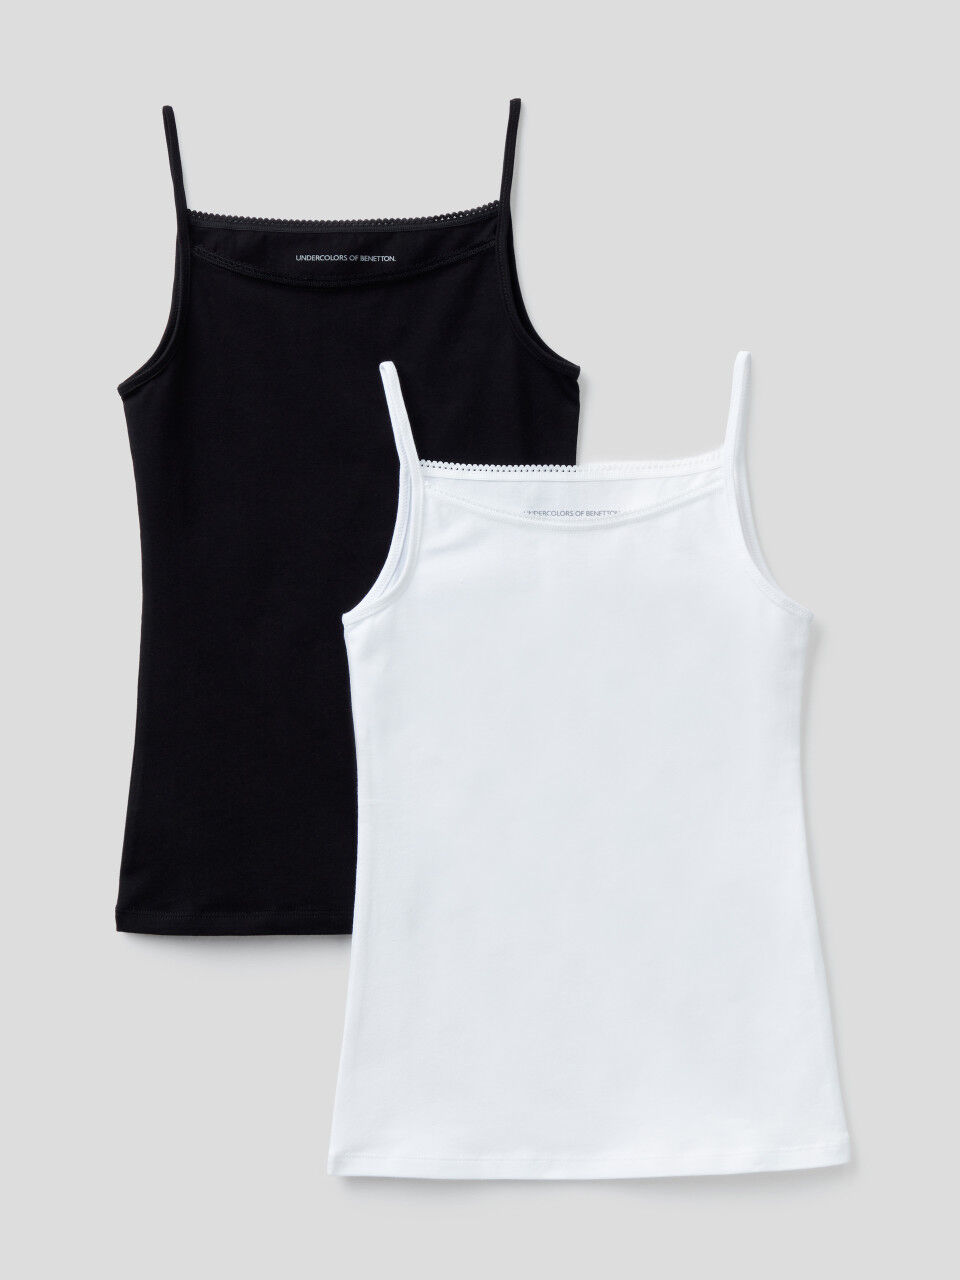 Nimiya Kids Girls Cotton Solid Vest Sleeveless Camisole Scoop Neck Undershirt School Underwear Tank Tops 